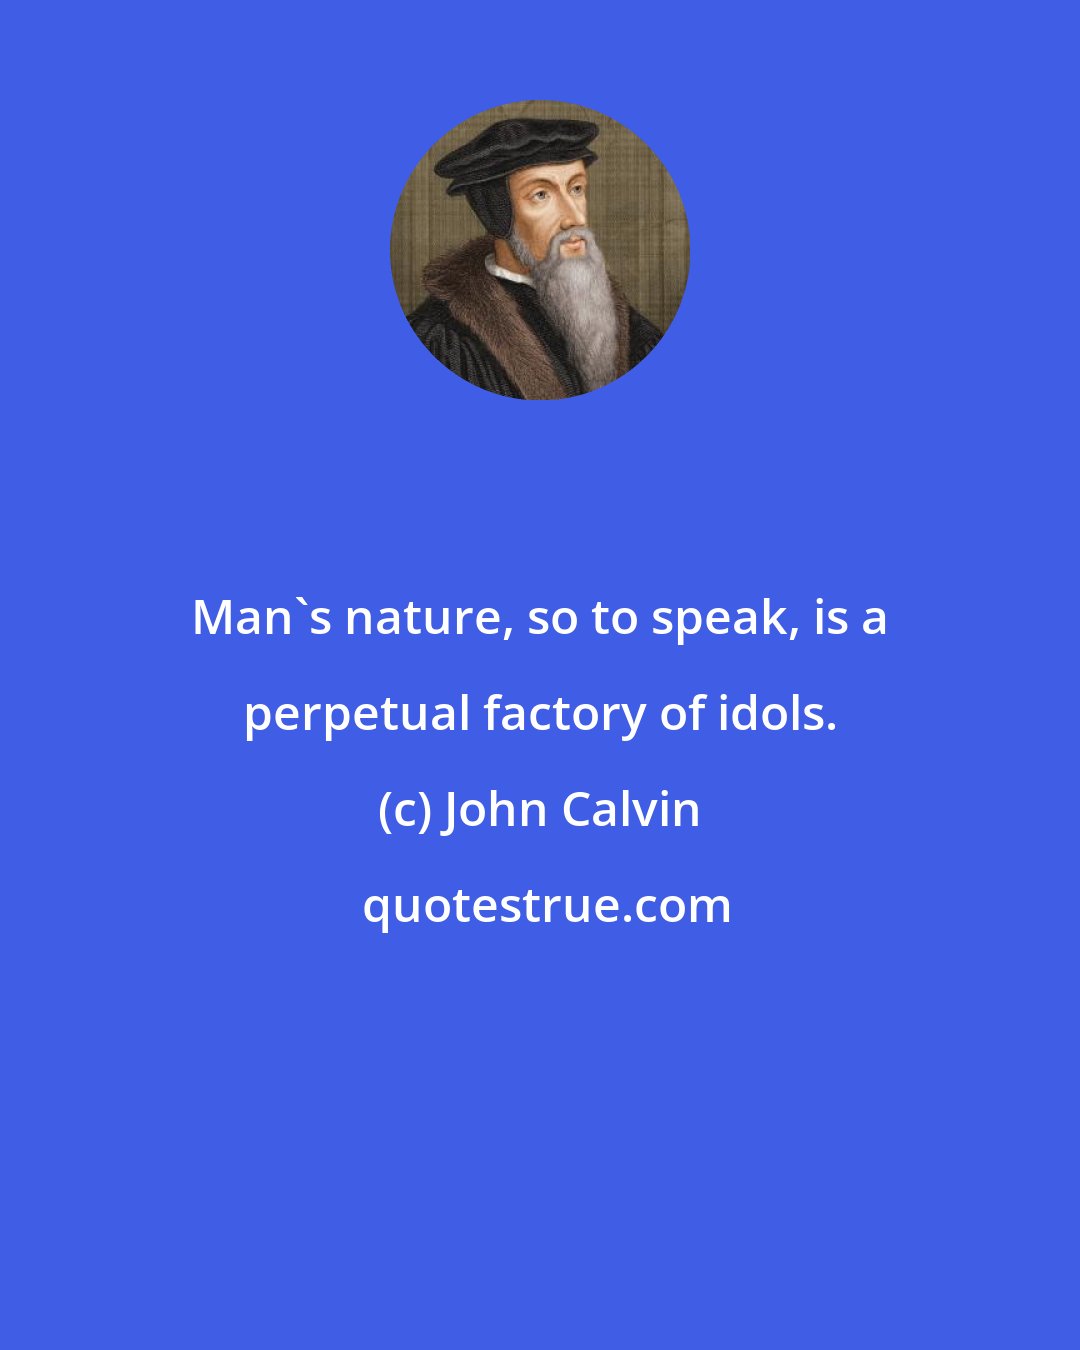 John Calvin: Man's nature, so to speak, is a perpetual factory of idols.